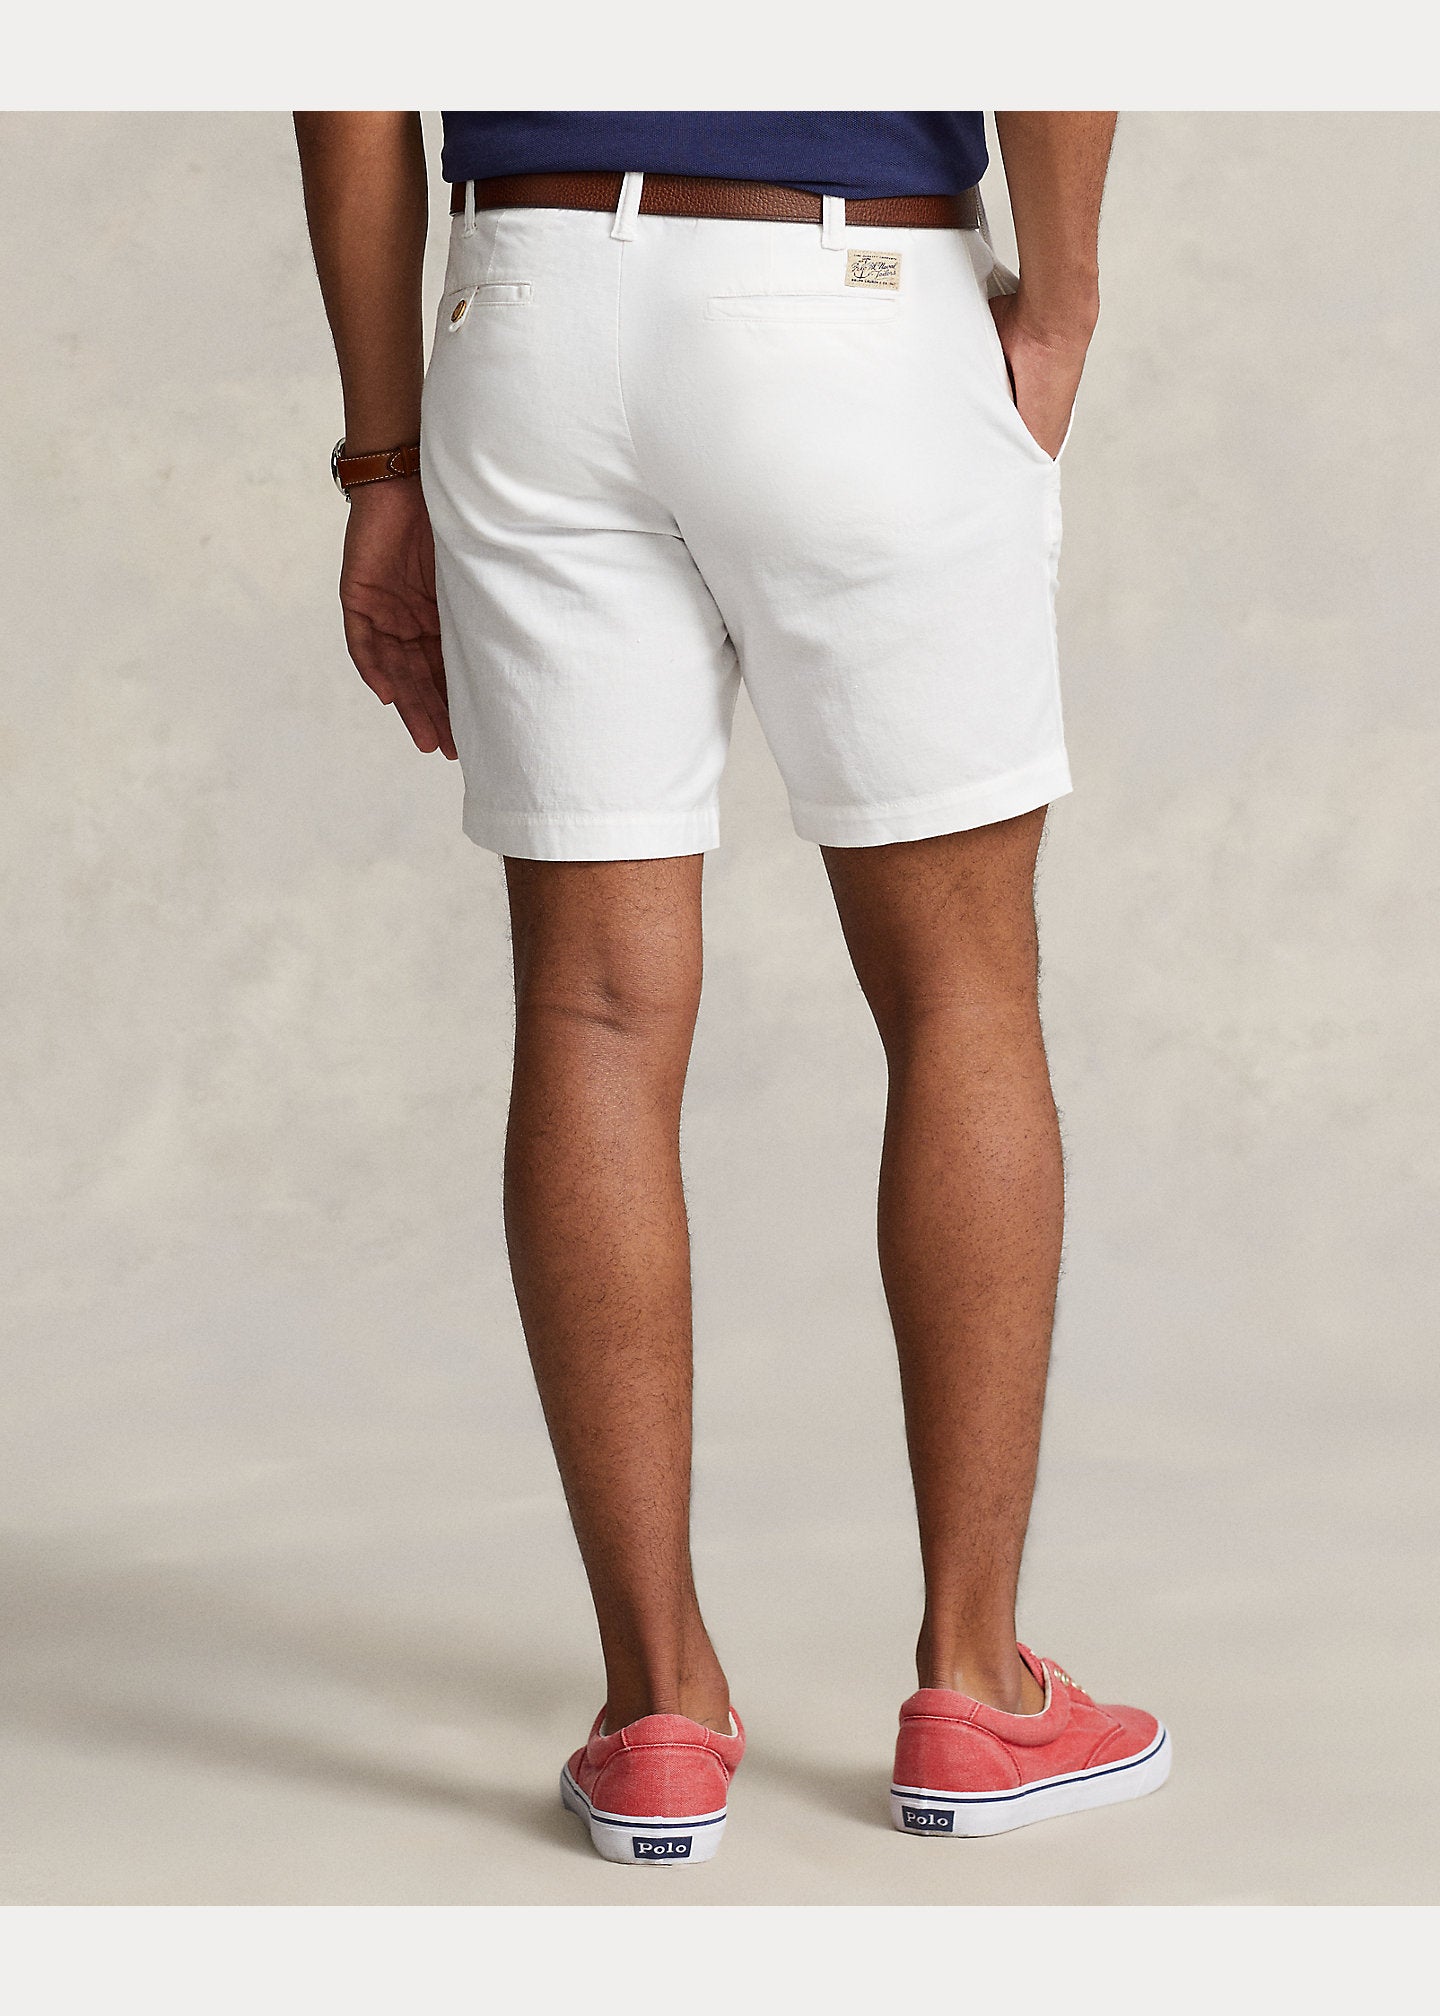 Buy Men's Cotton Linen Casual Wear Regular Fit Shorts